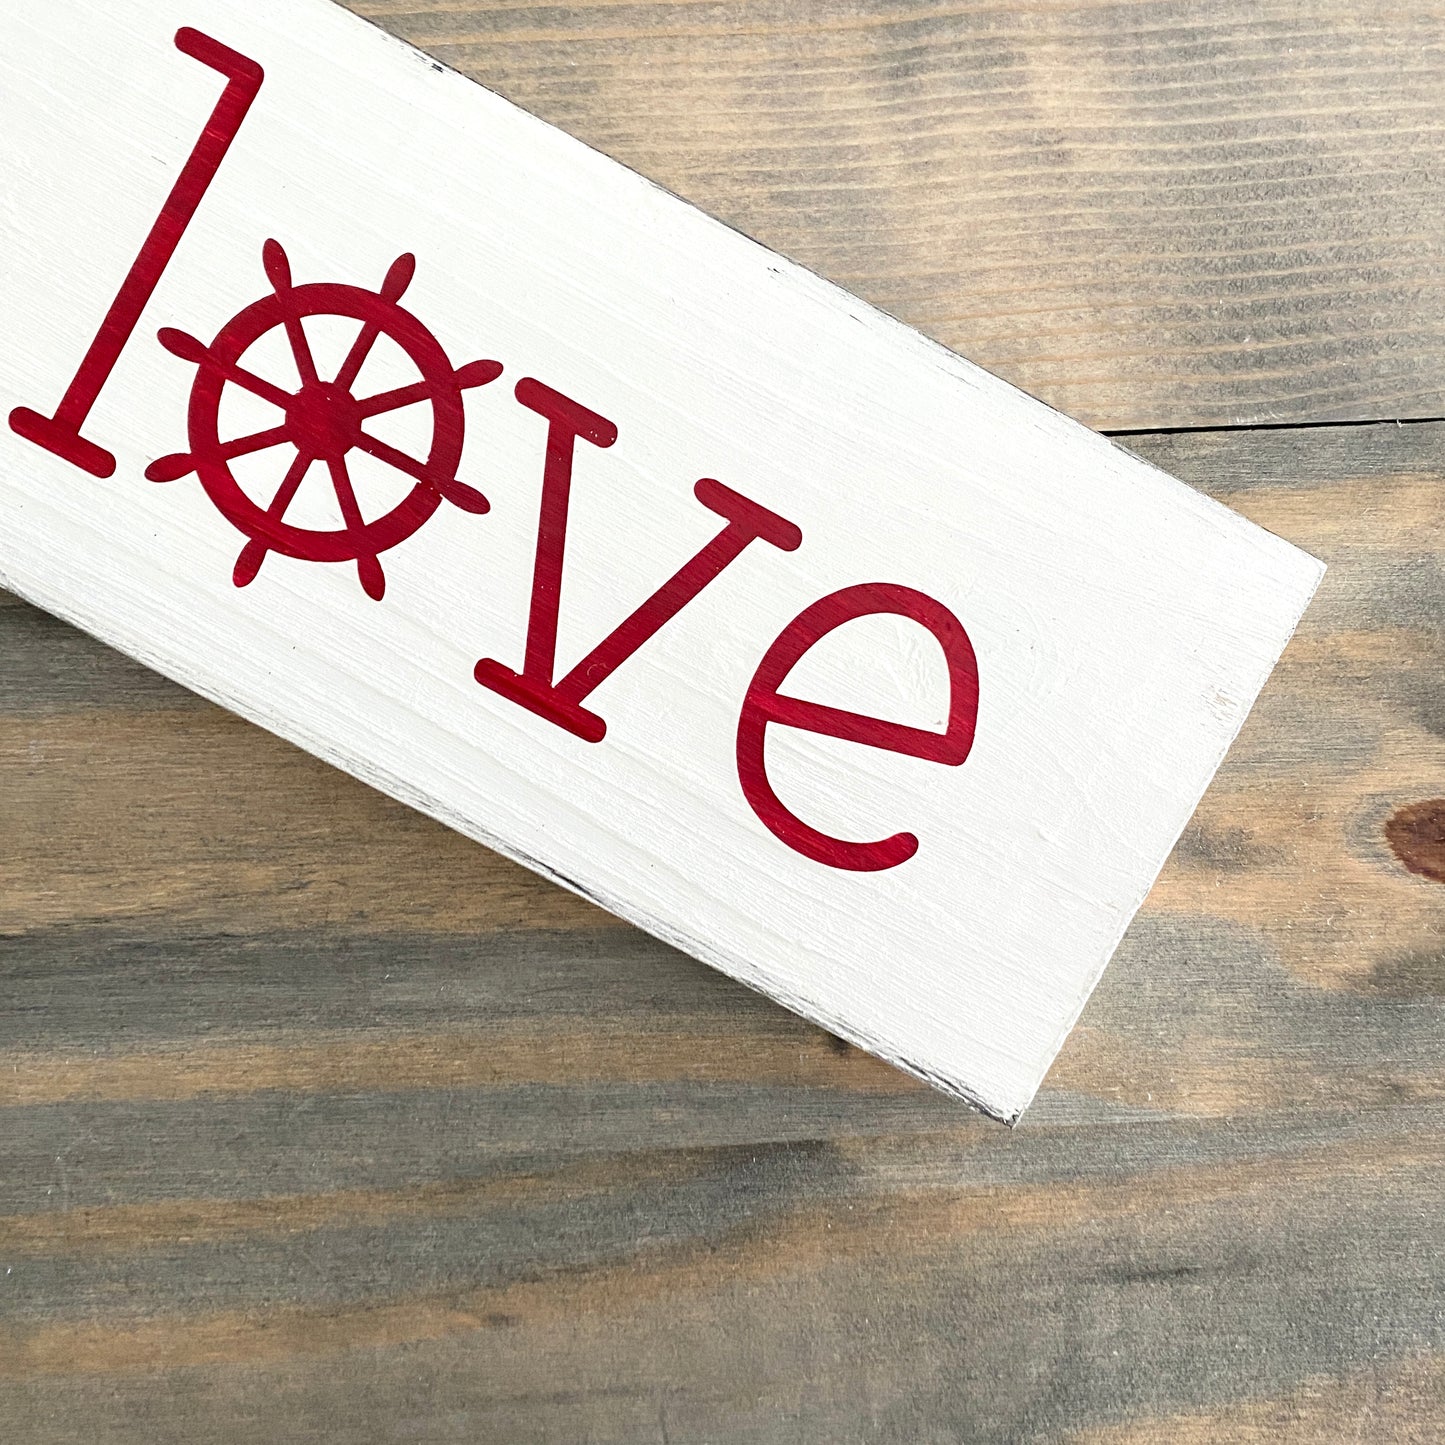 Small Love Ship Wheel Sign